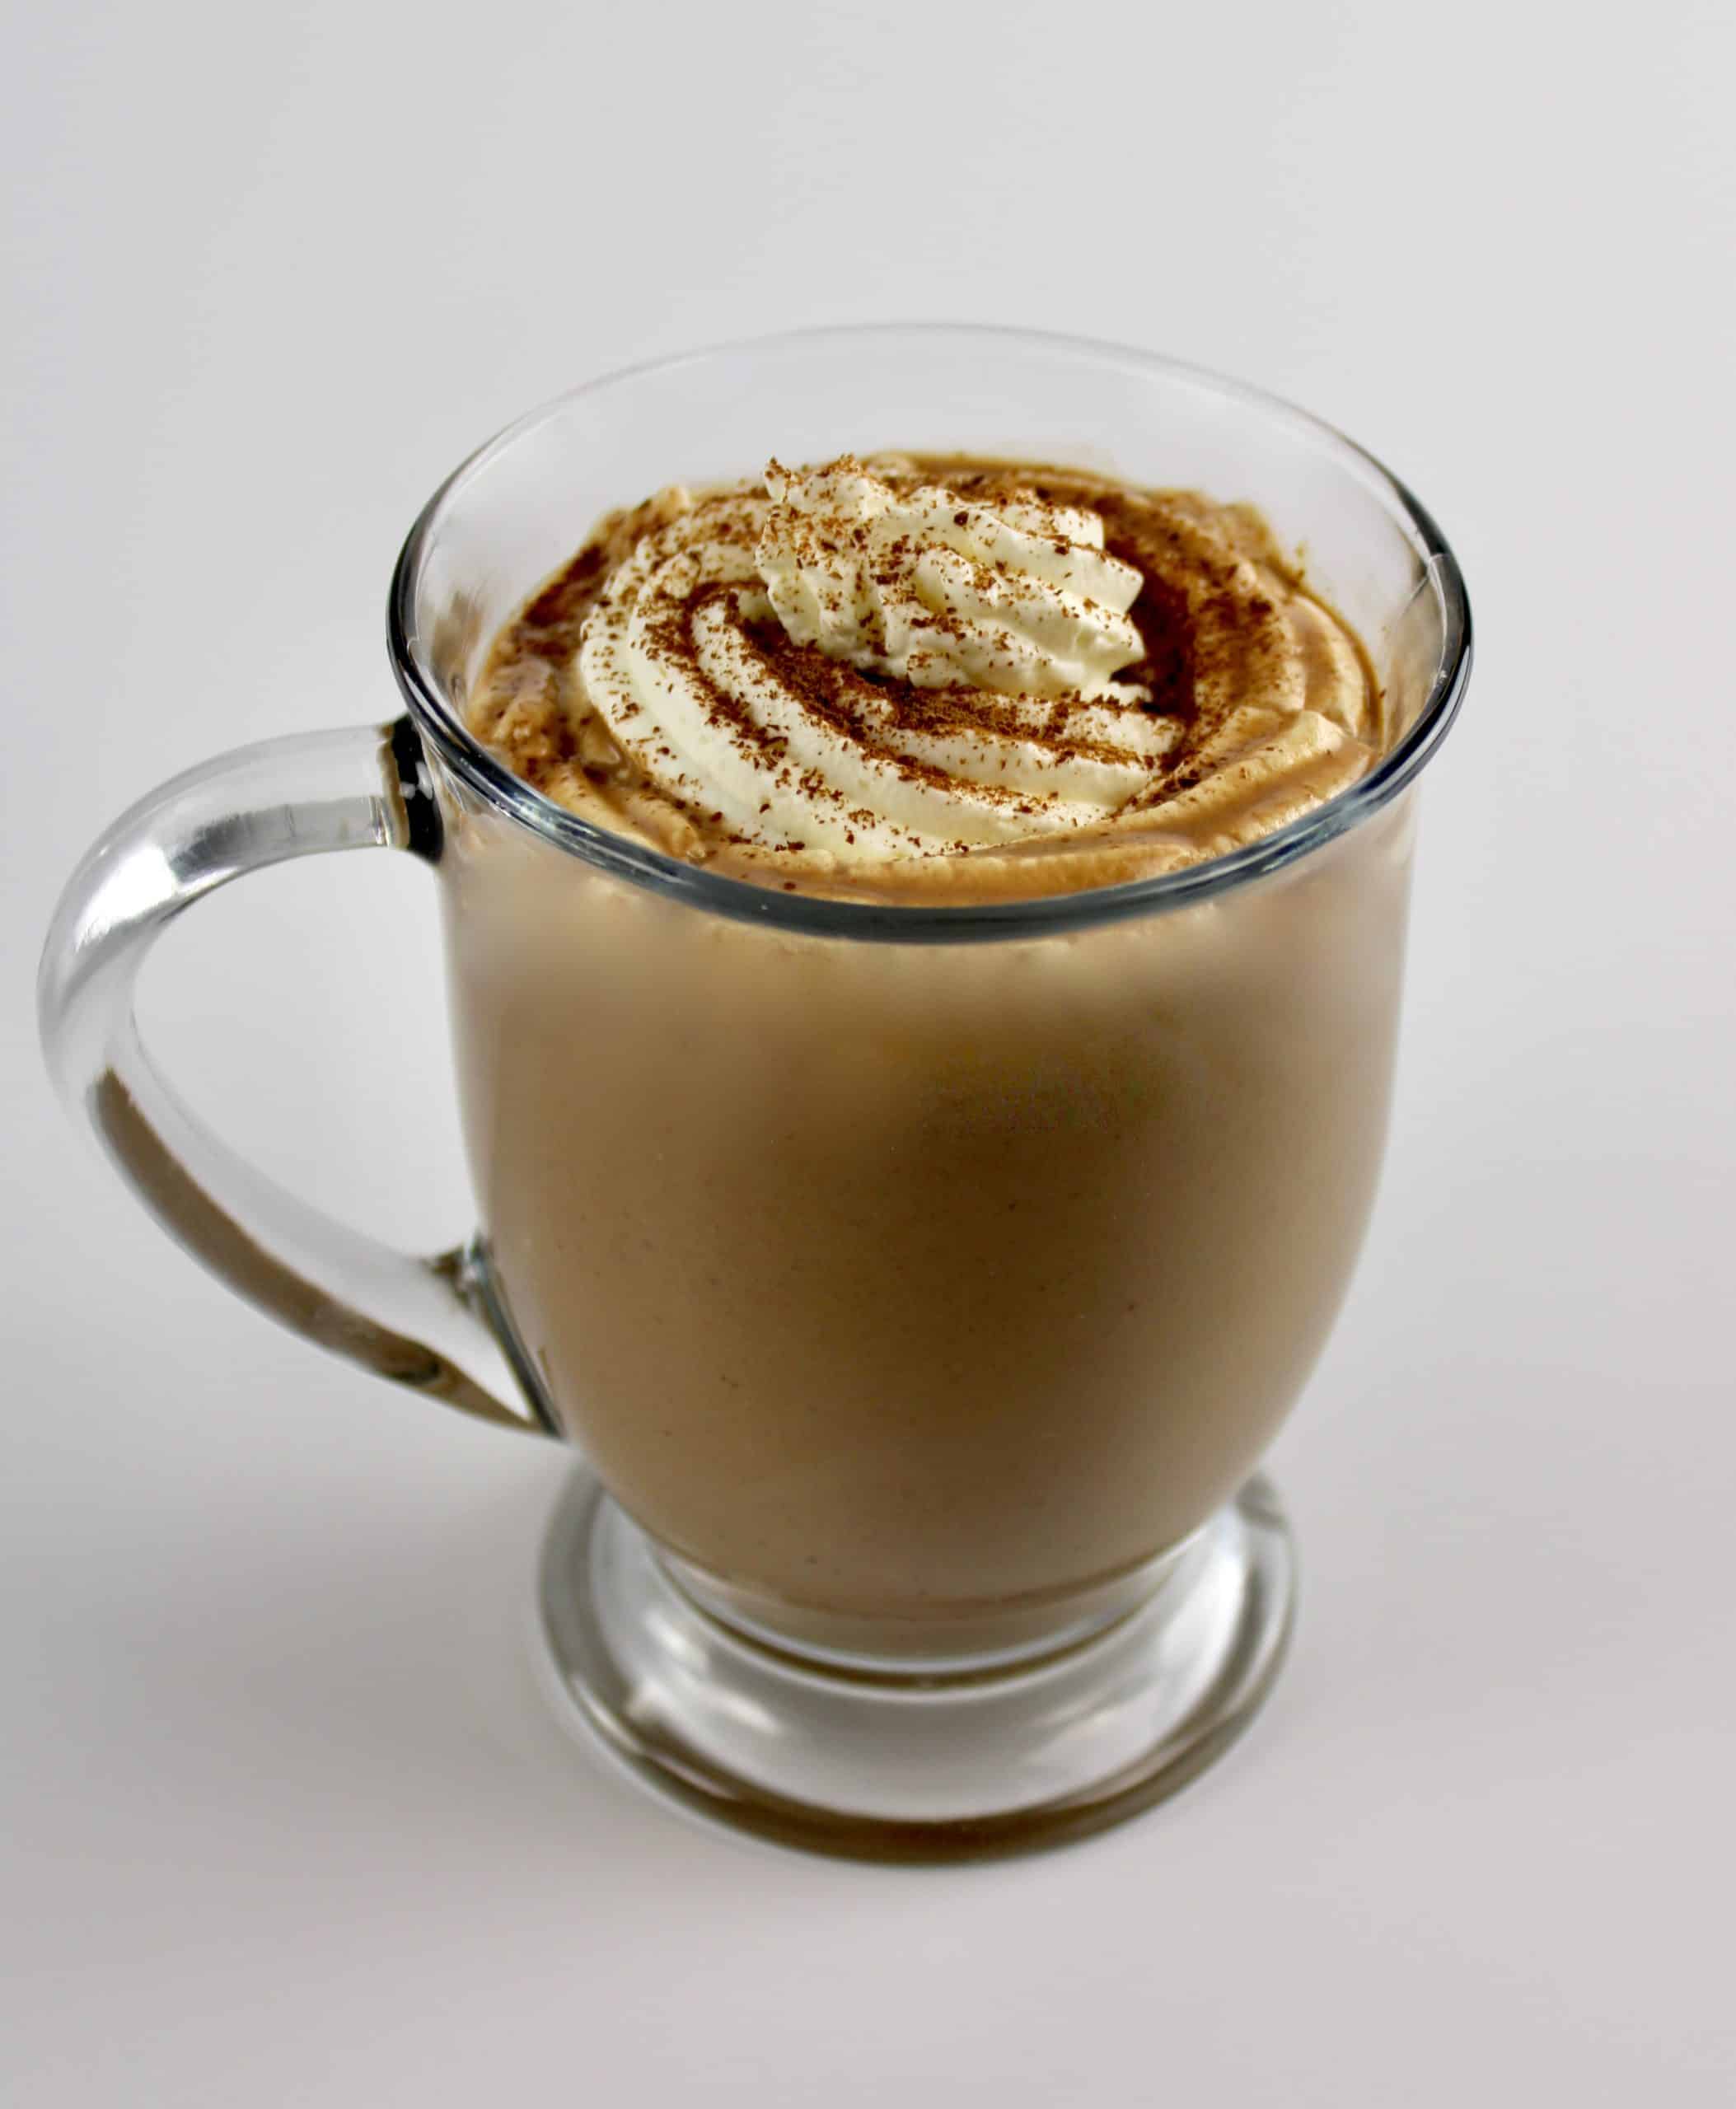 Keto Hot Chocolate in glass mug with whip cream on top